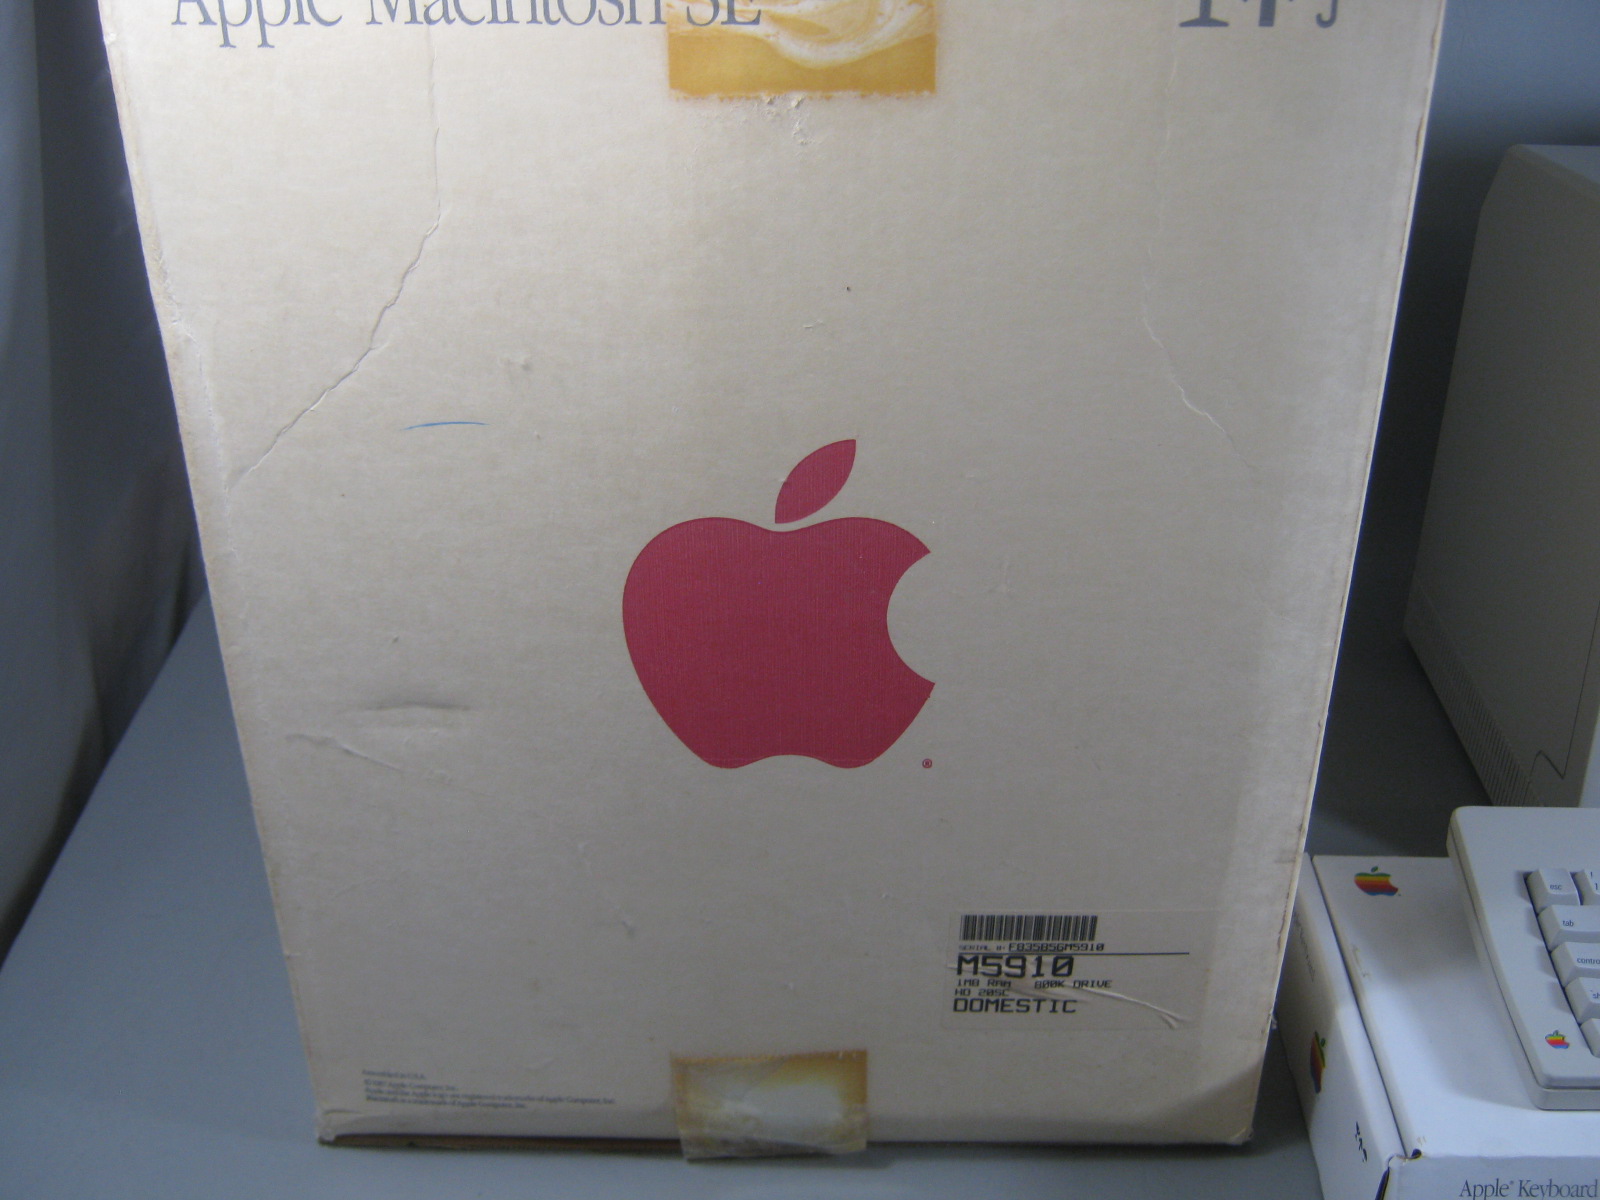 Vtg Apple Macintosh SE Desktop Computer 1MB Ram 800k Drive Mouse Keyboard In Box 10